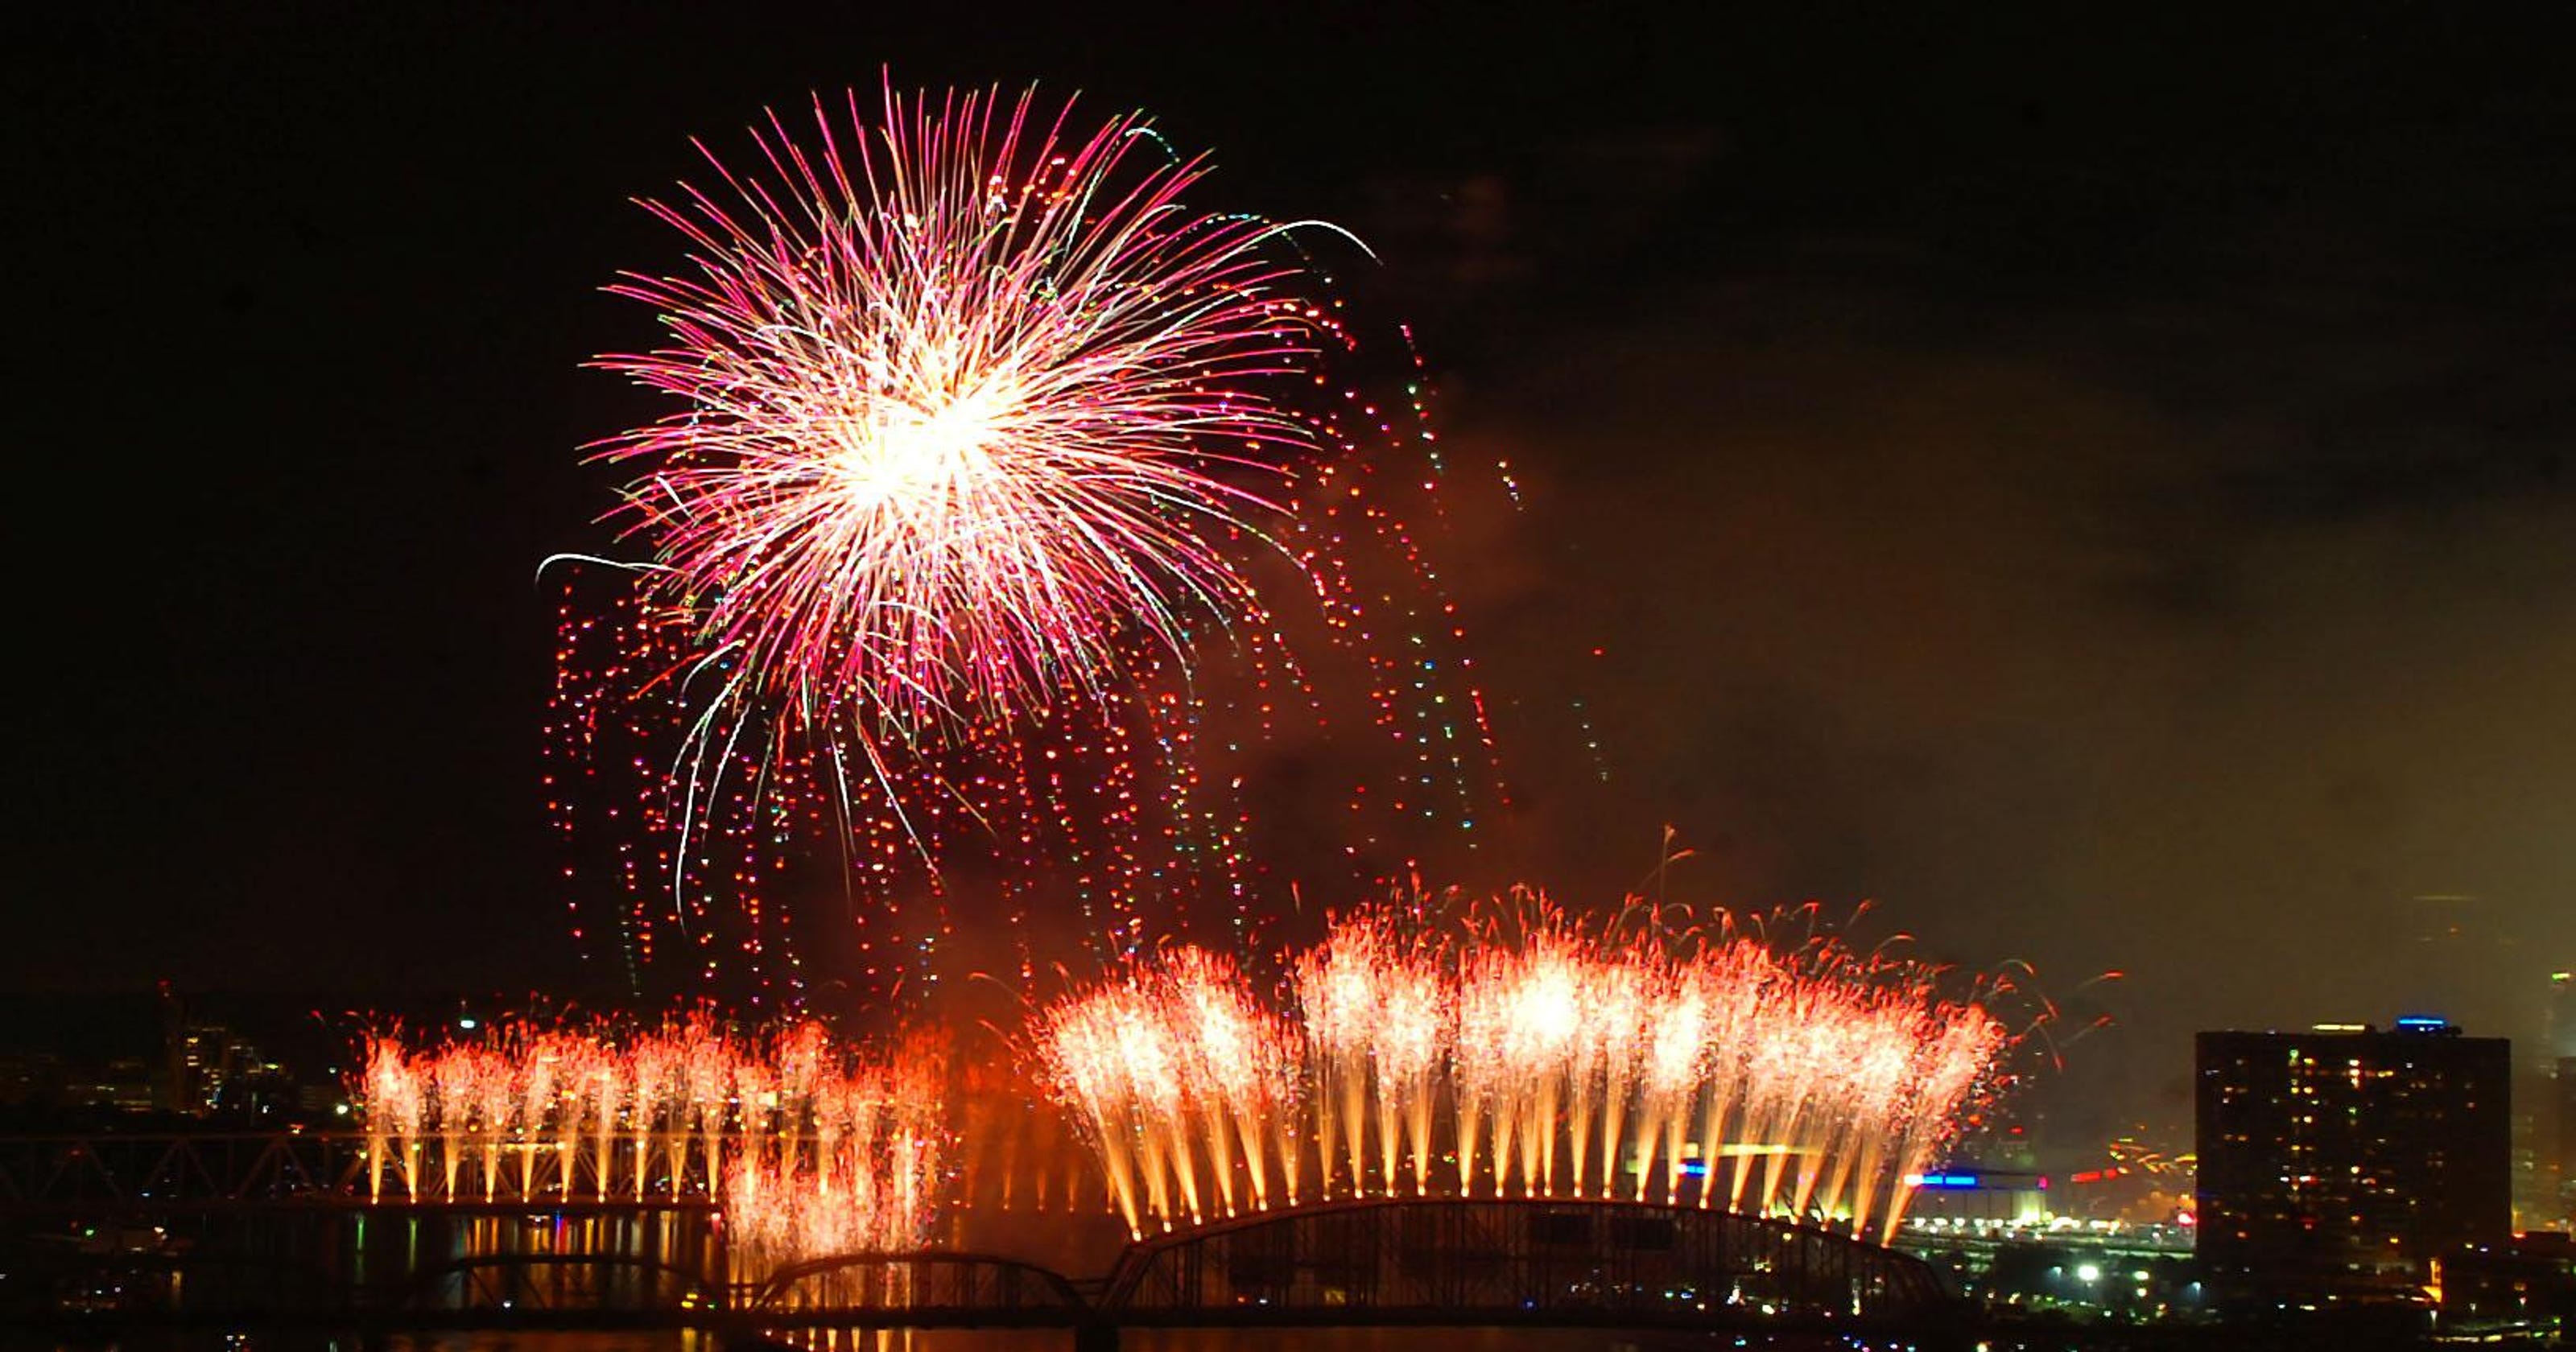 Fireworks celebrate Cincinnati’s unique holiday